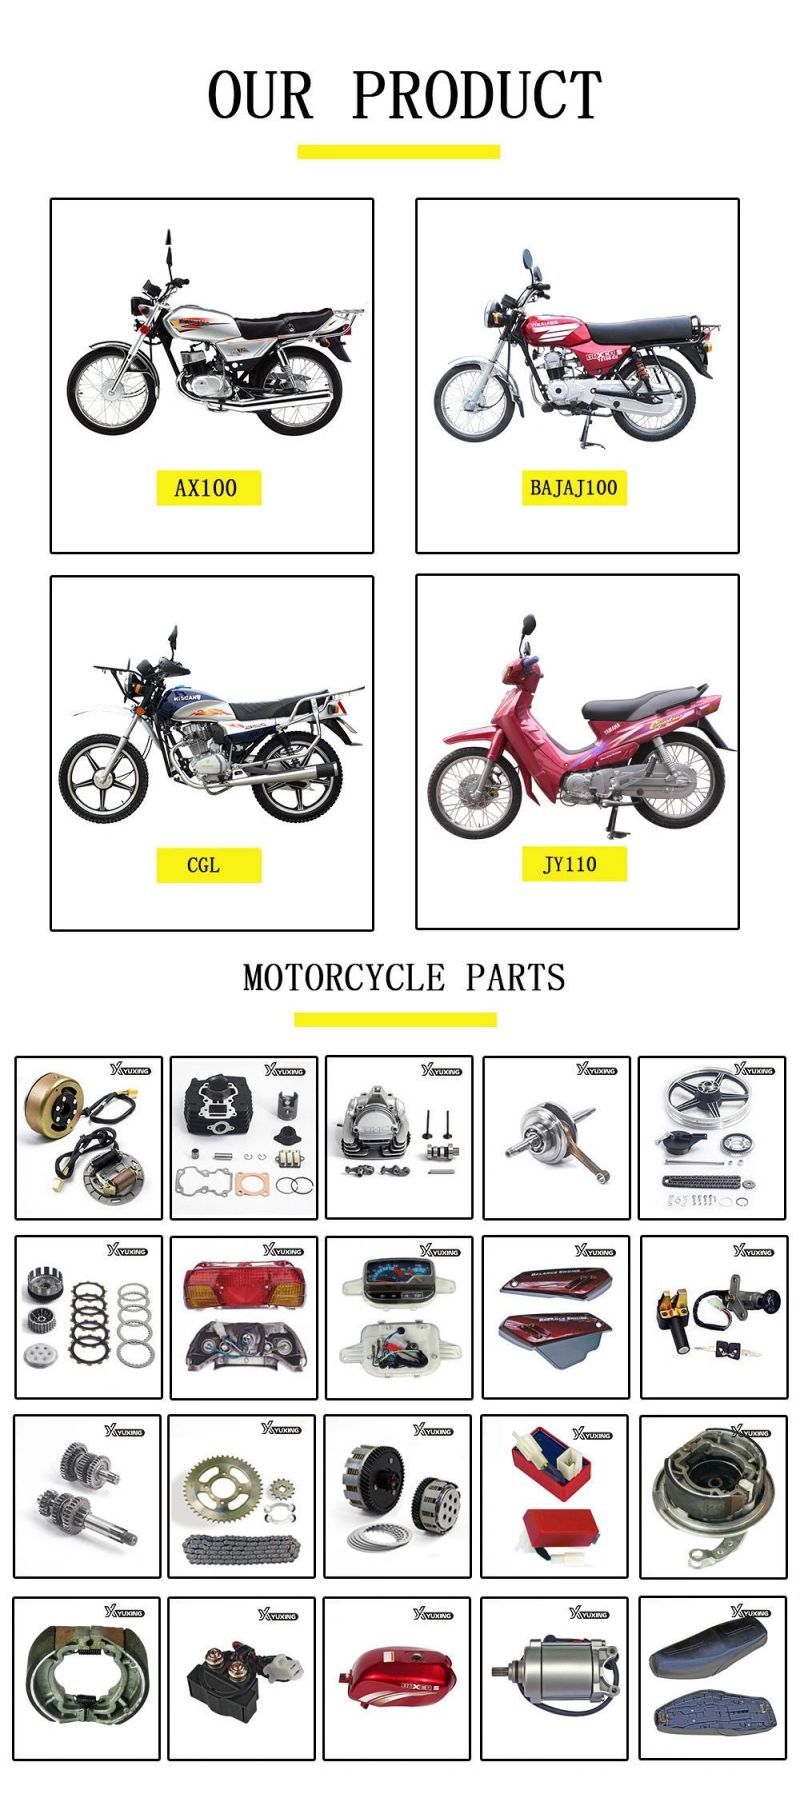 Cgl Original Motorcycle Parts Motorcycle Fuel Tank Oil Tank